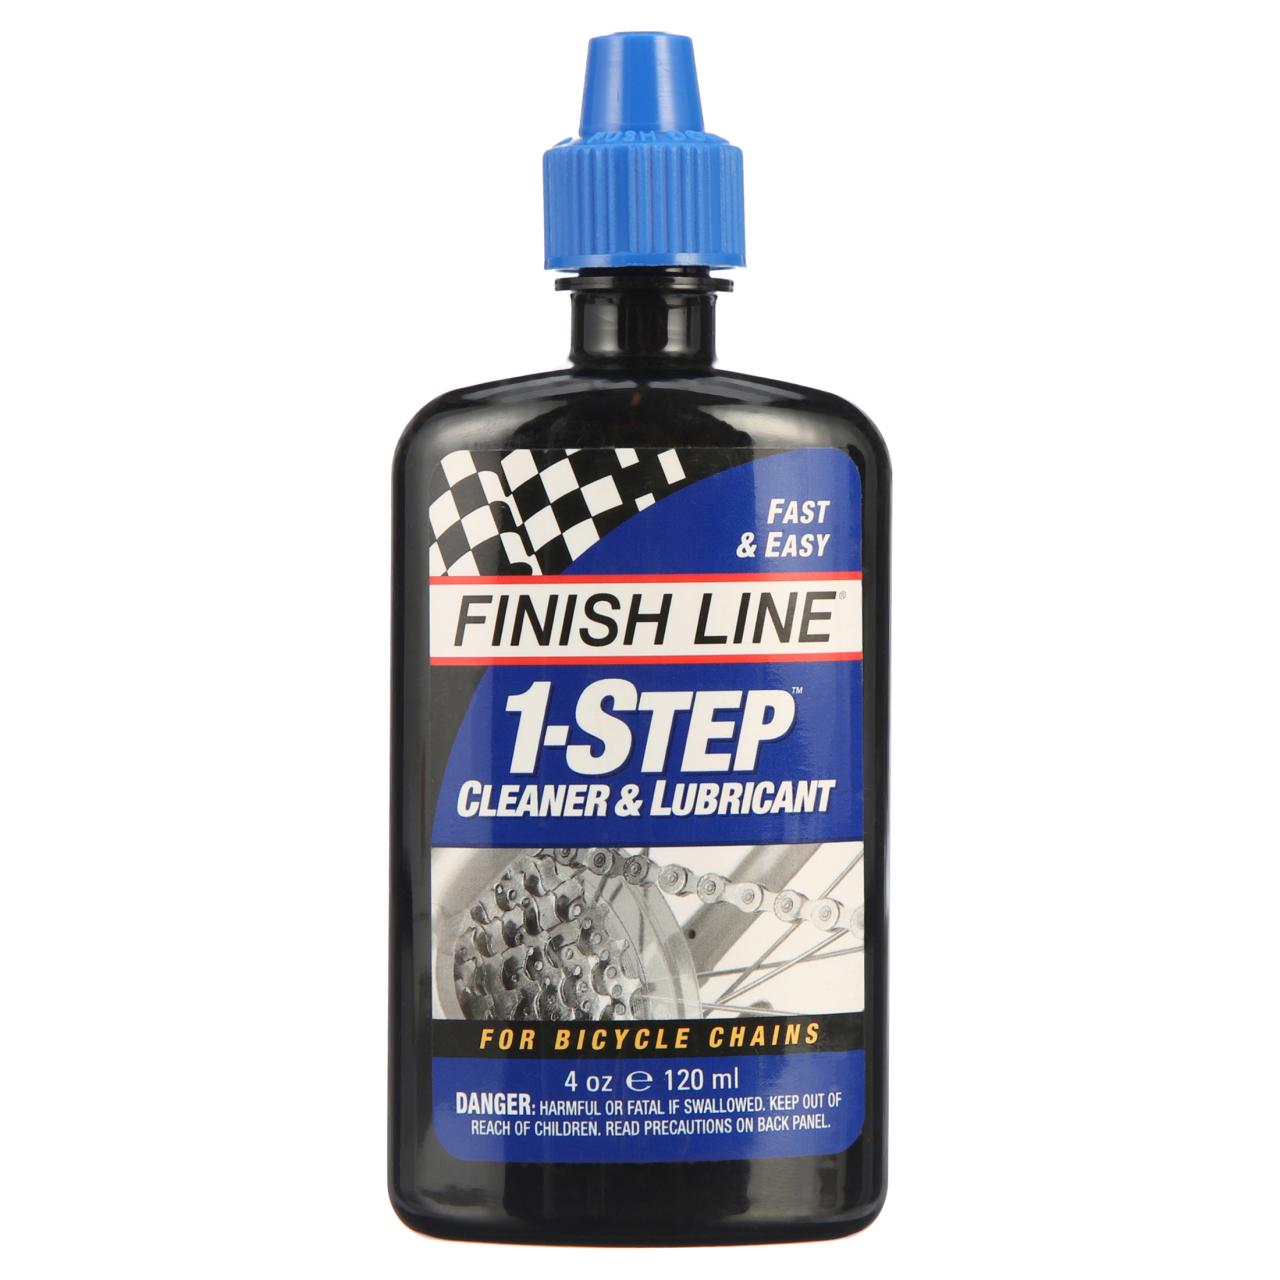 Finish Line 1-Step Universal Cleaner & Lubricant Spray acheter | Bike -Discount